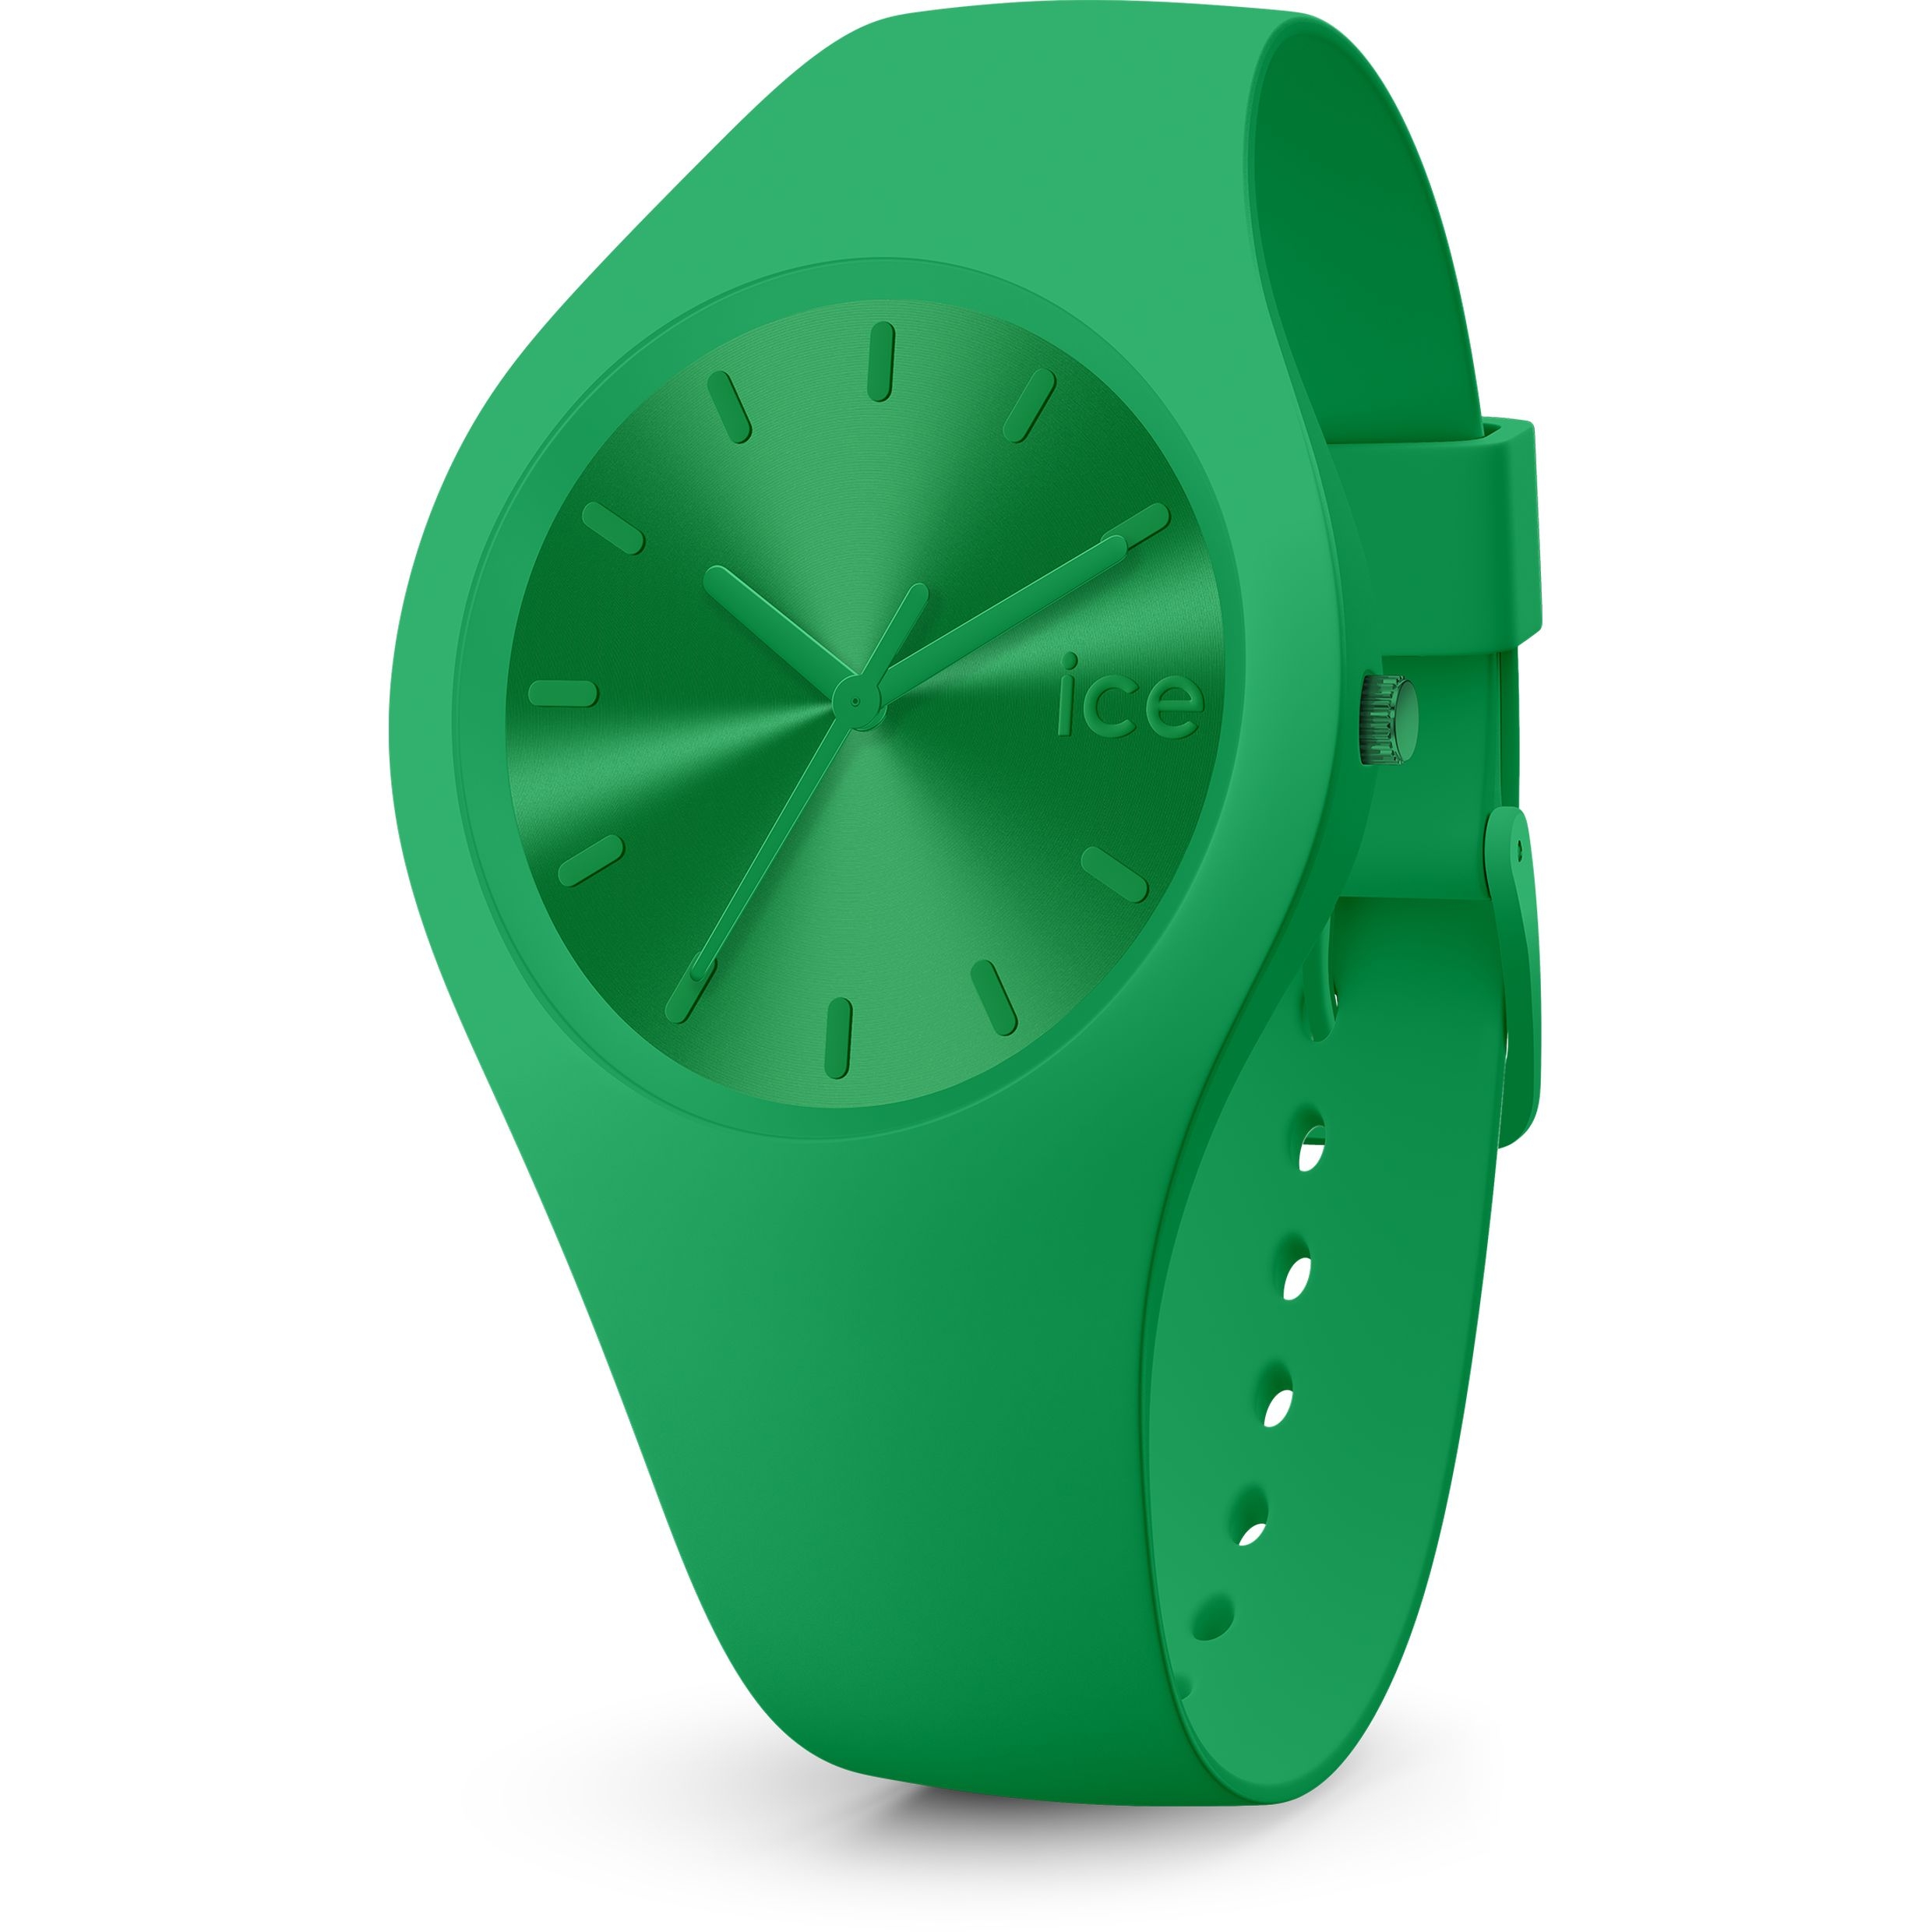 Ice watch часы. Часы айс вотч. Часы Ice watch Unisex. Зеленые часы Ice. Часы белые Ice watch.